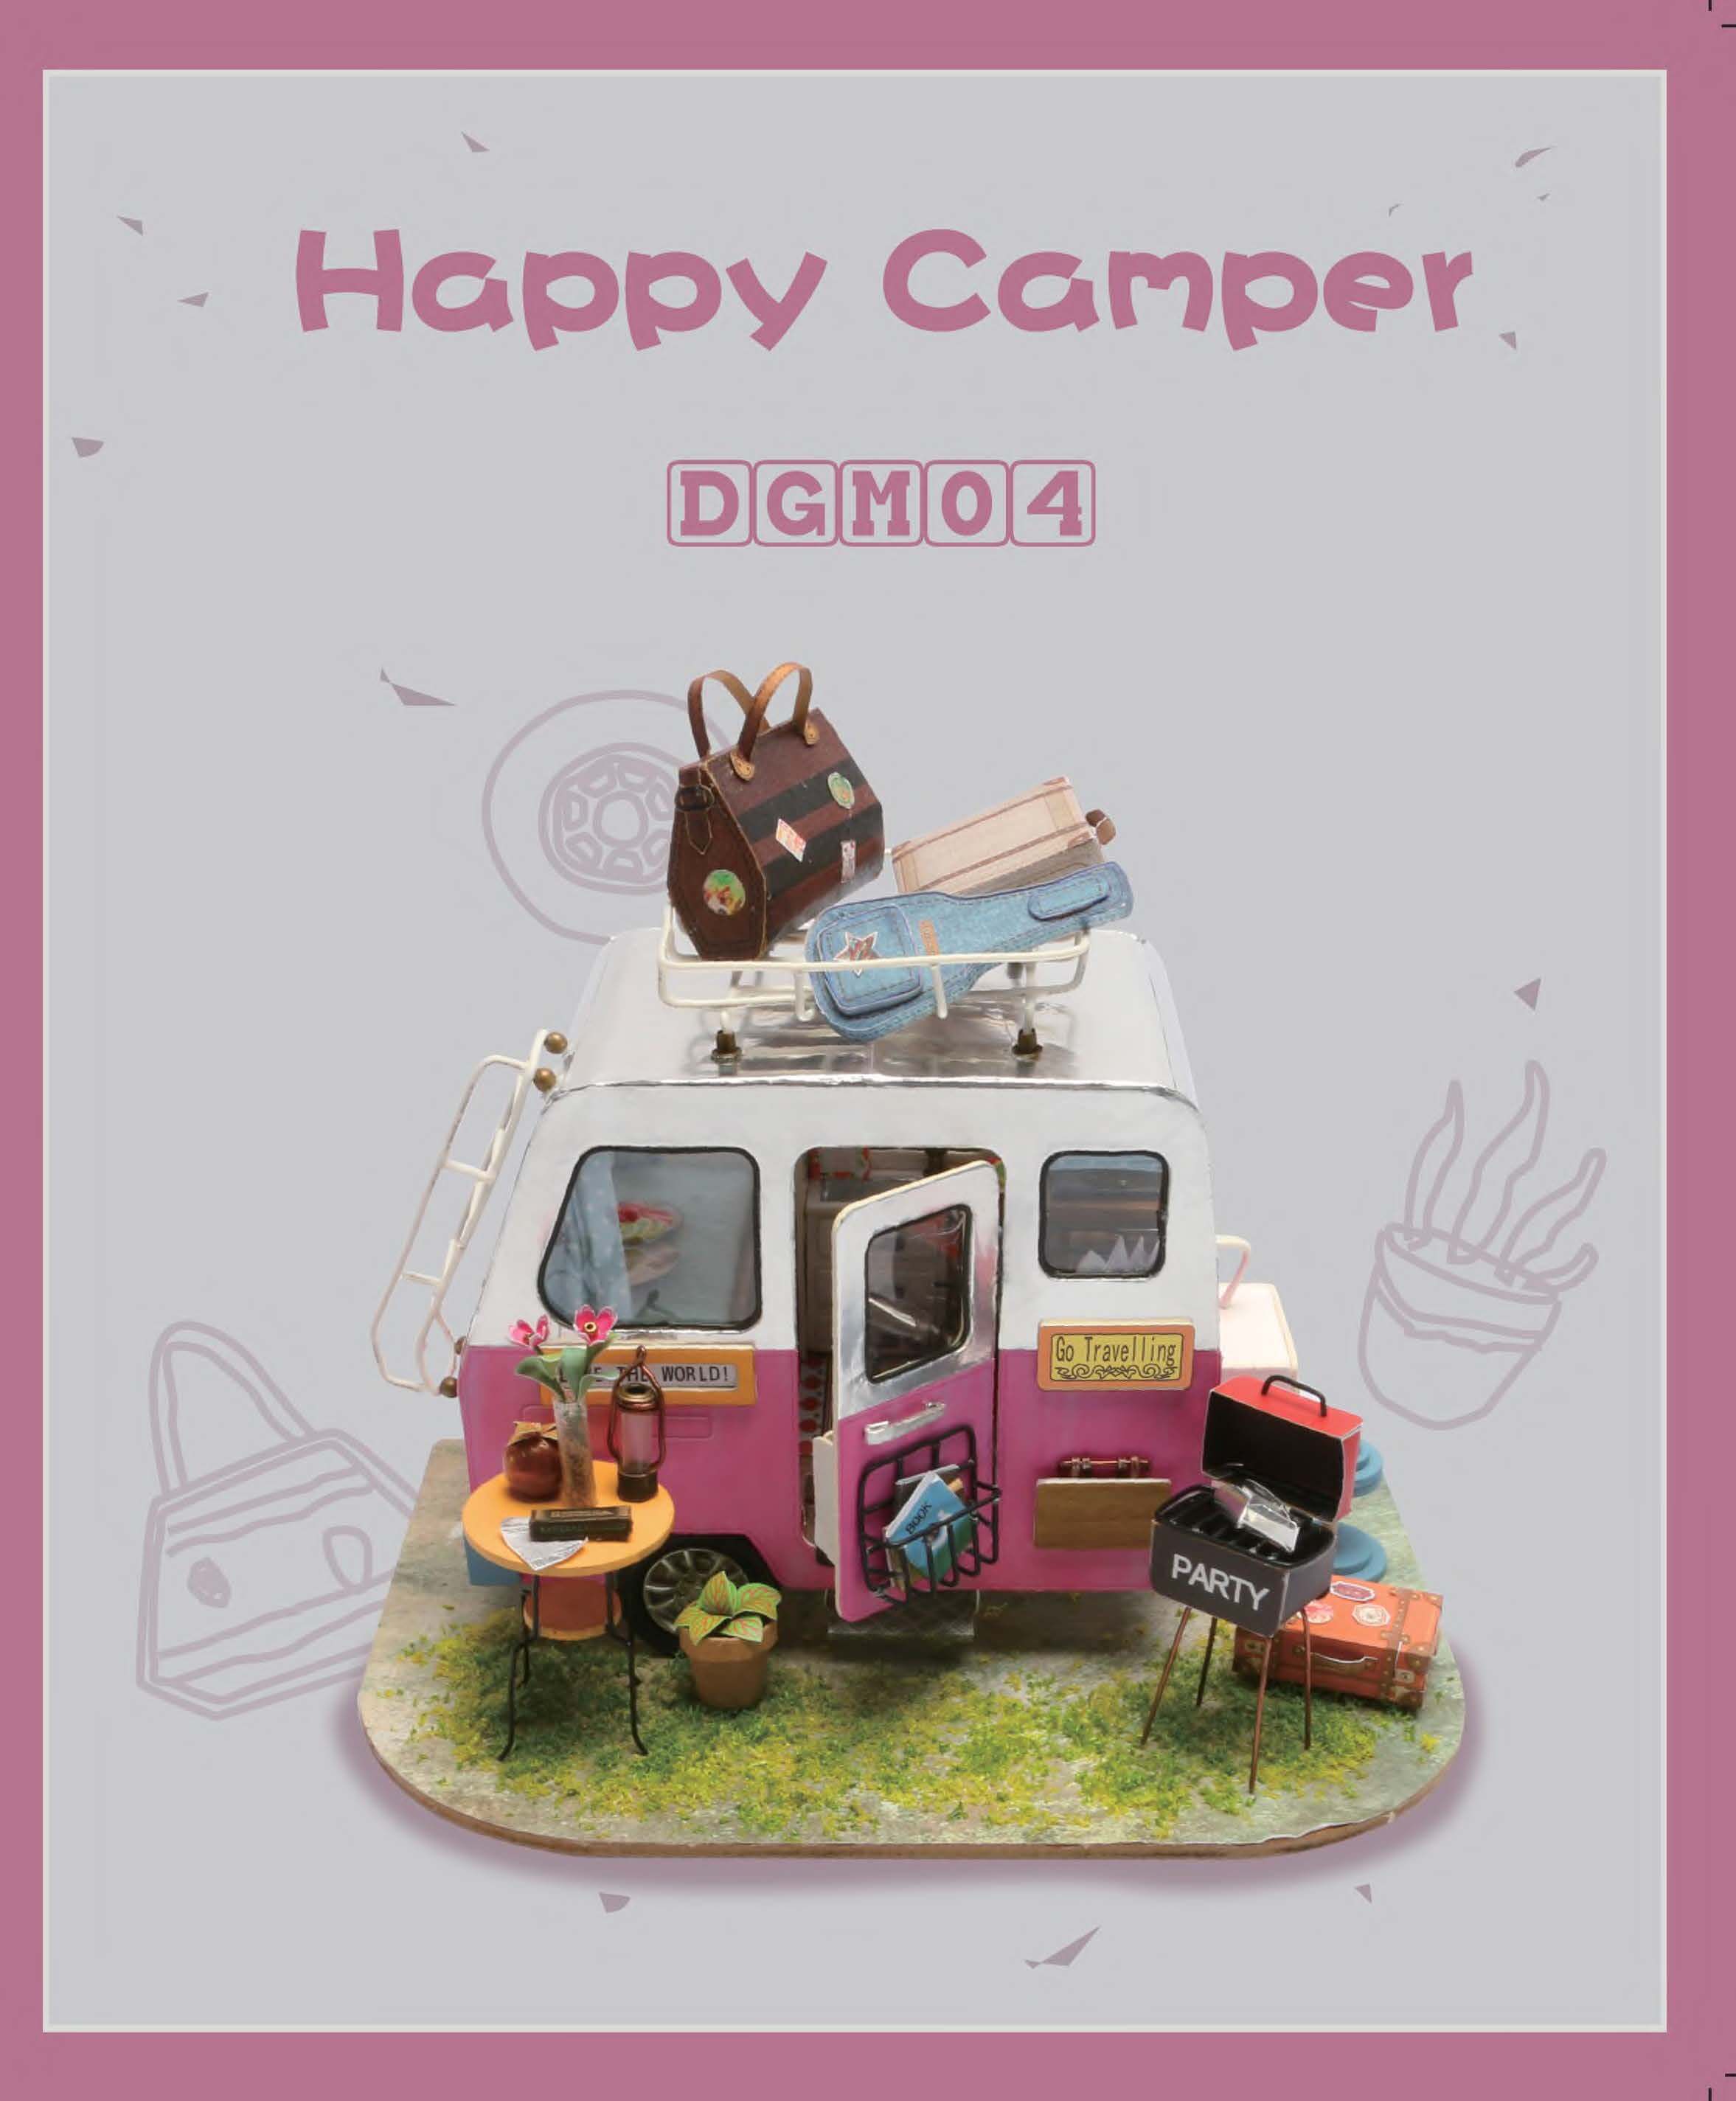 RDGM04 - Happy Camper Manual